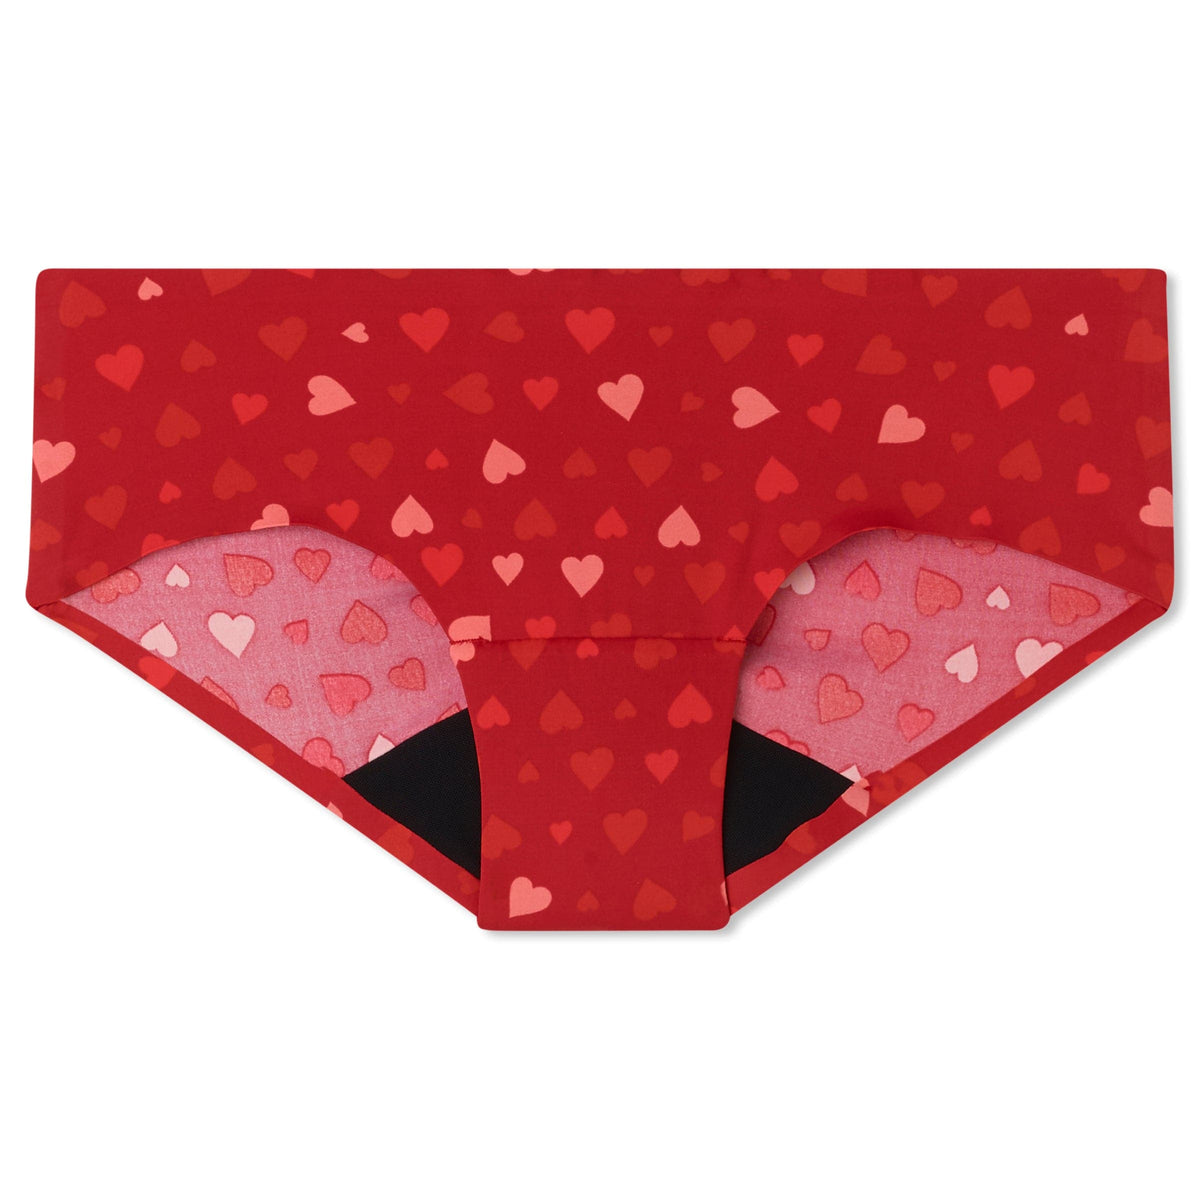 Period Underwear Seamless - Brief | Classic Ruby Red